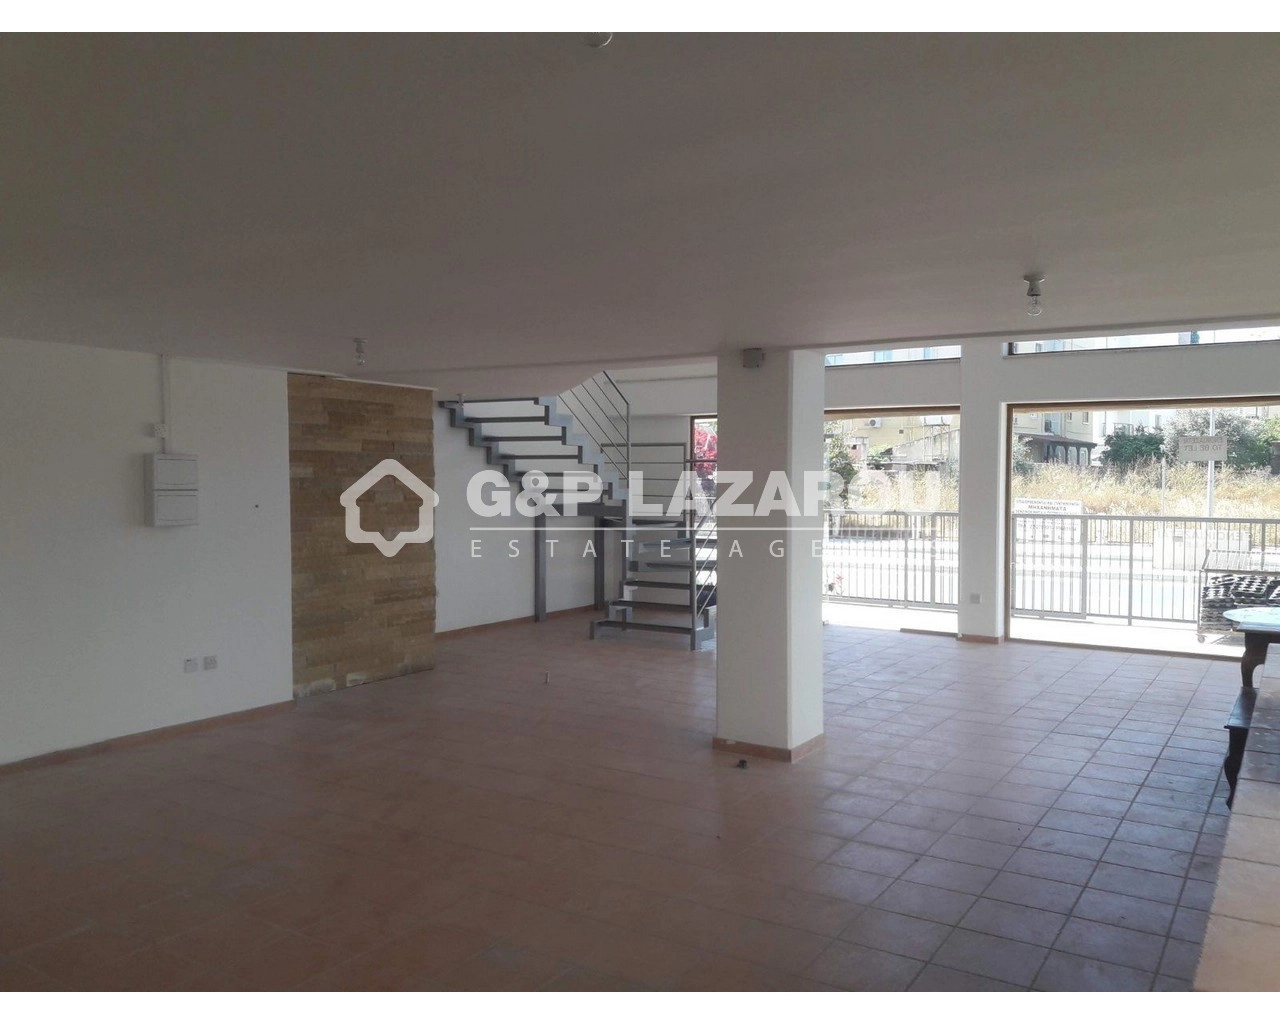 150m² Commercial for Rent in Aglantzia, Nicosia District